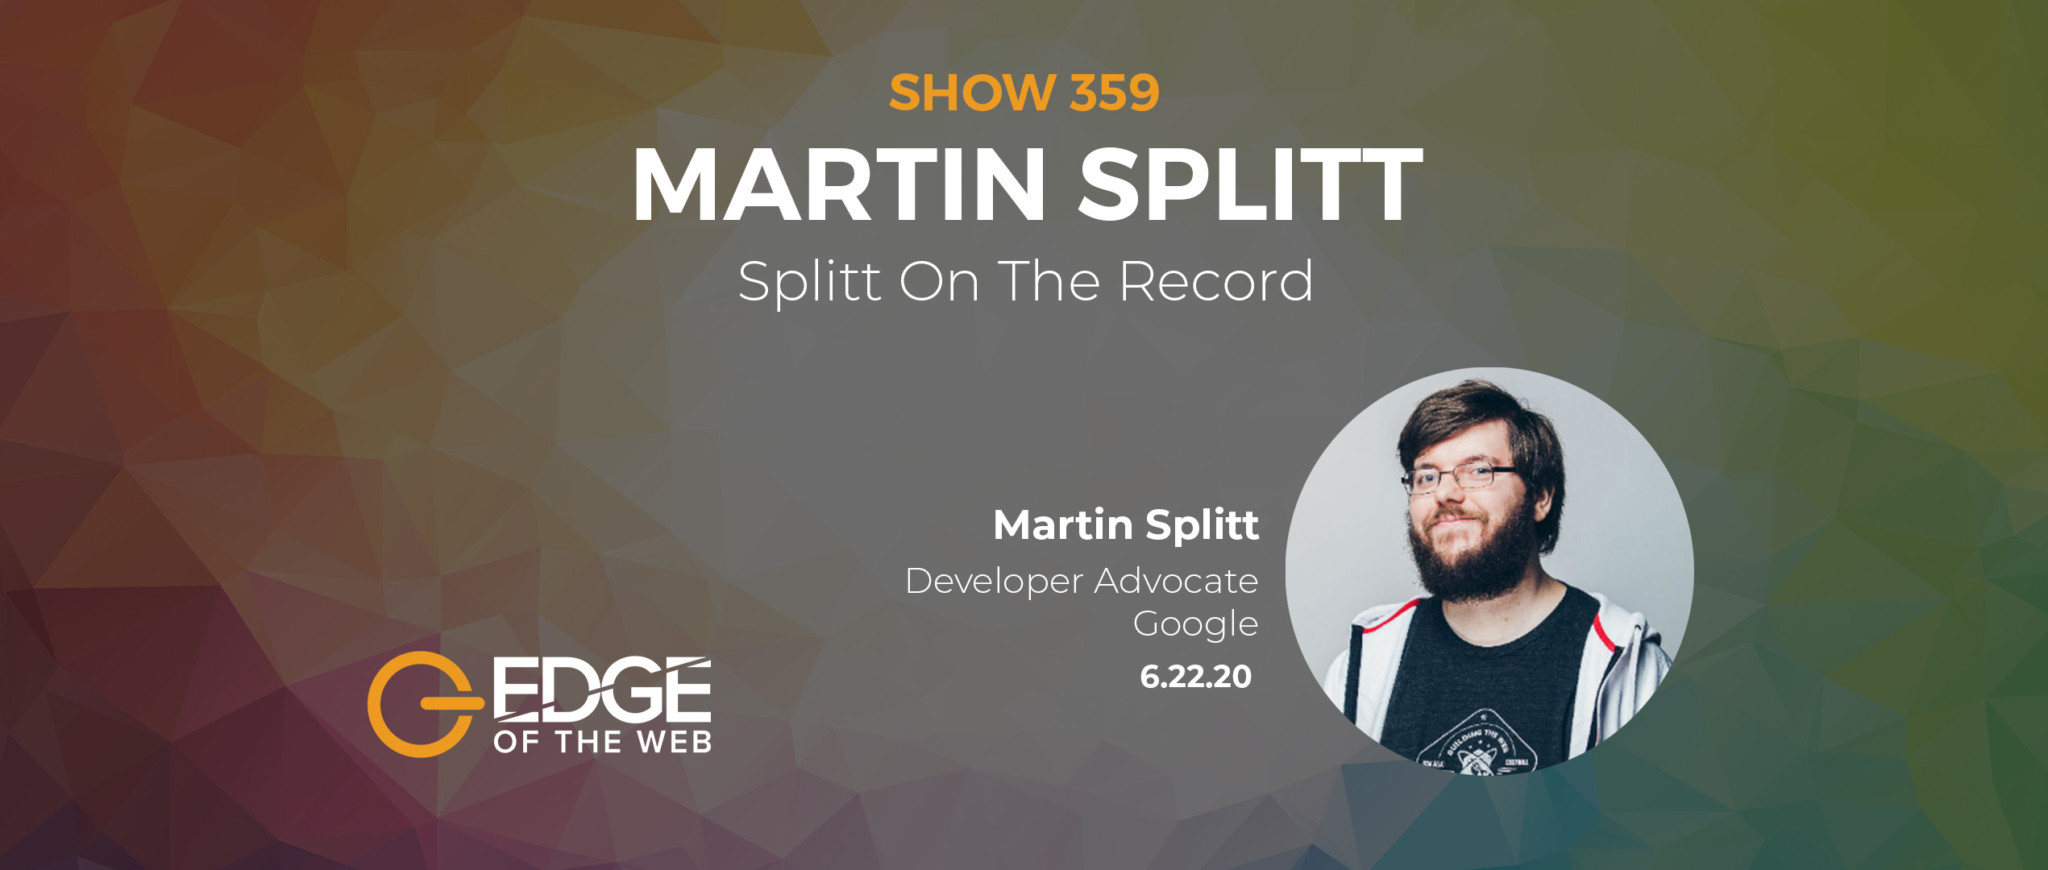 Martin Splitt Featured Image EP359 of EDGE